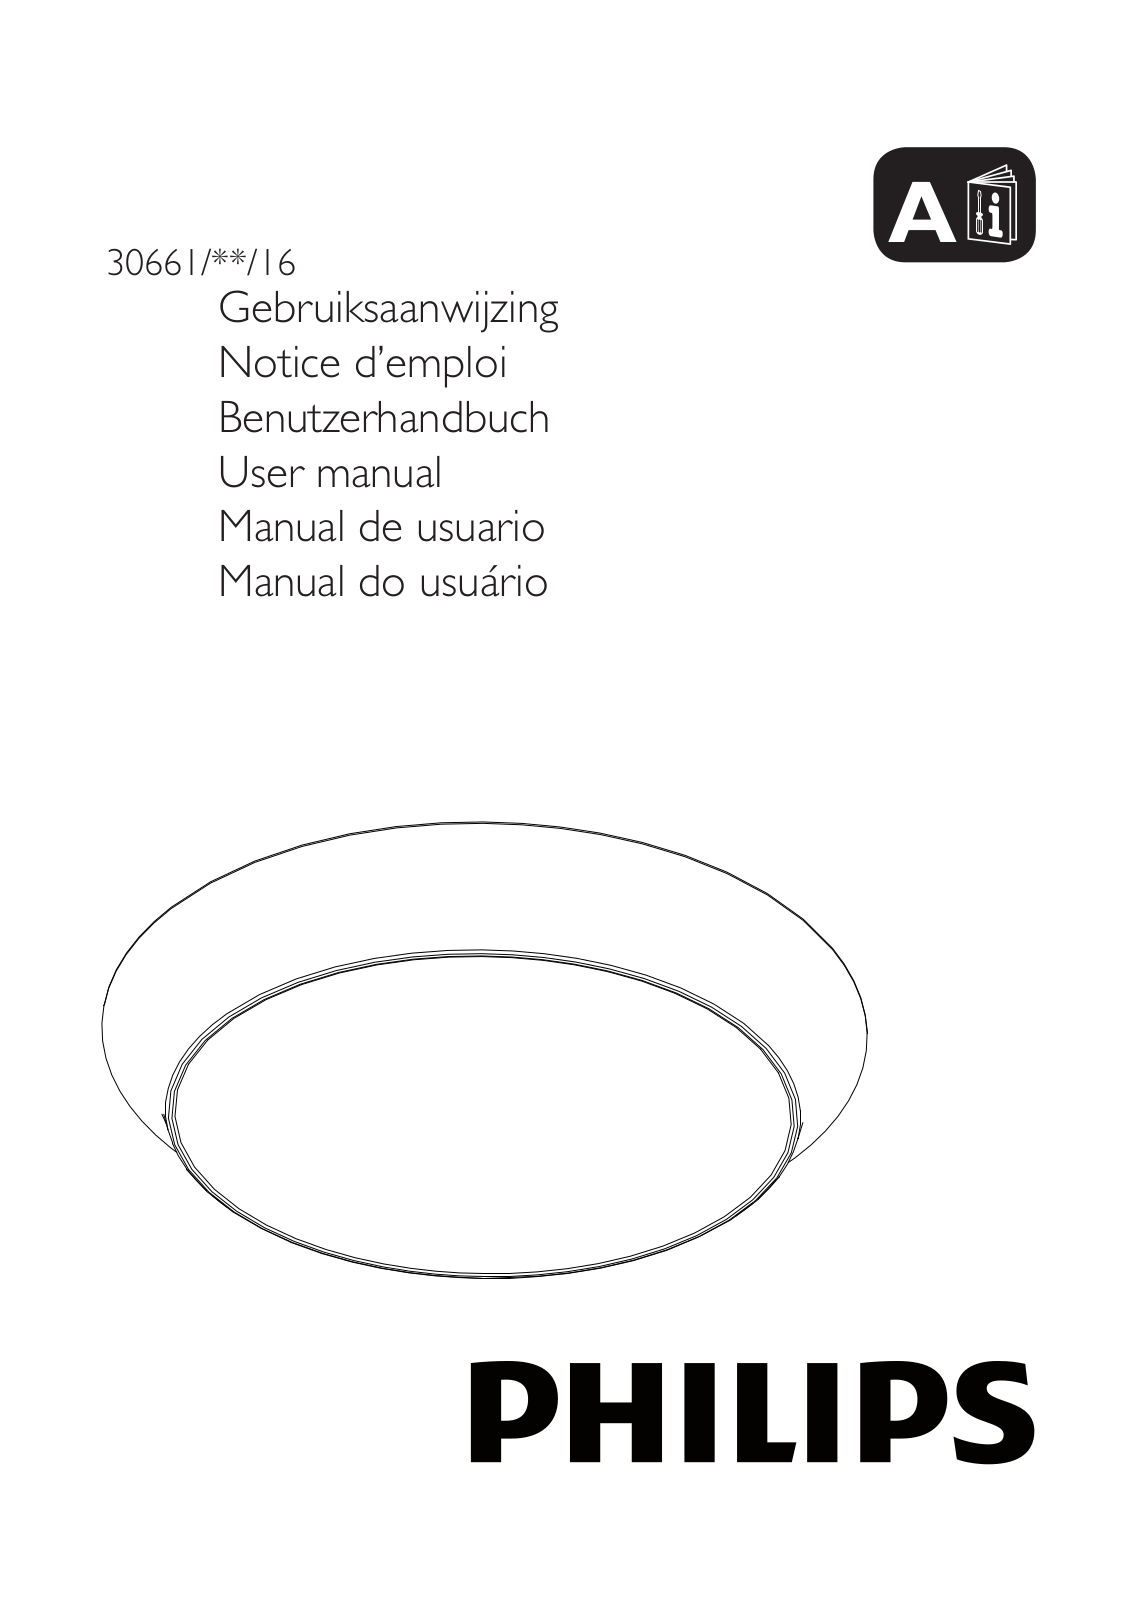 Philips 30661-38-16 User Manual